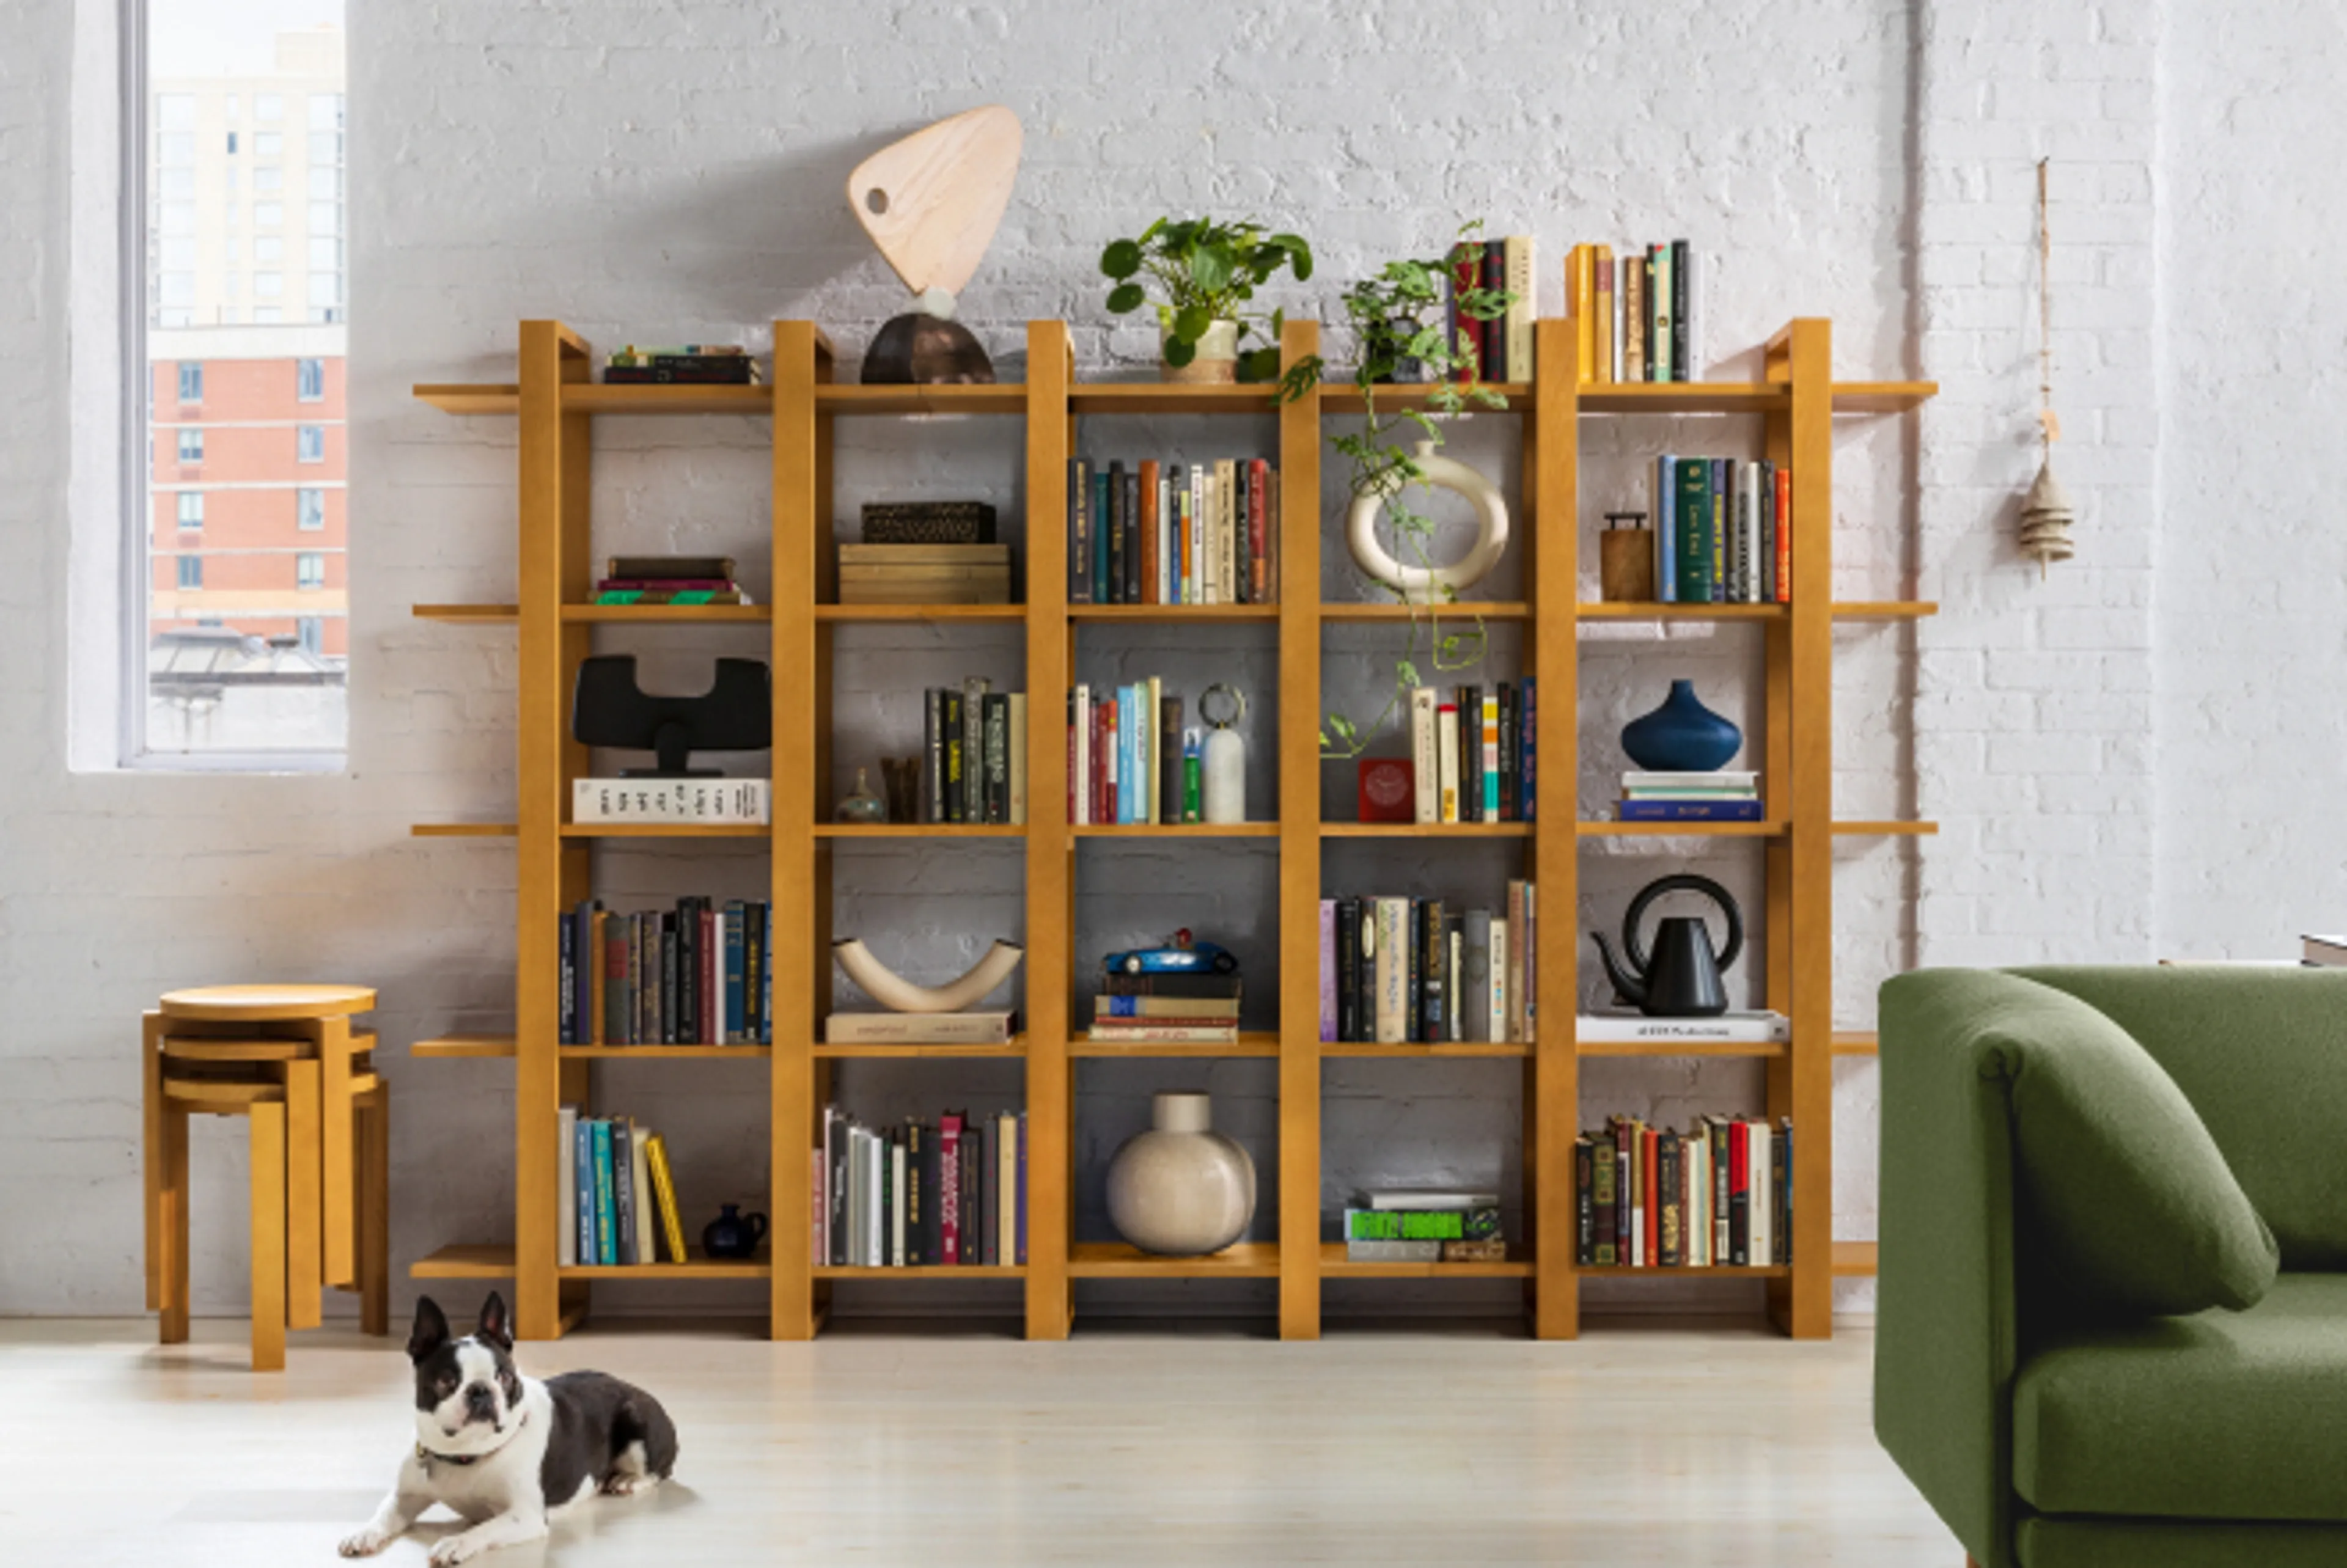 Triple Index Bookshelves in industrial living room setting